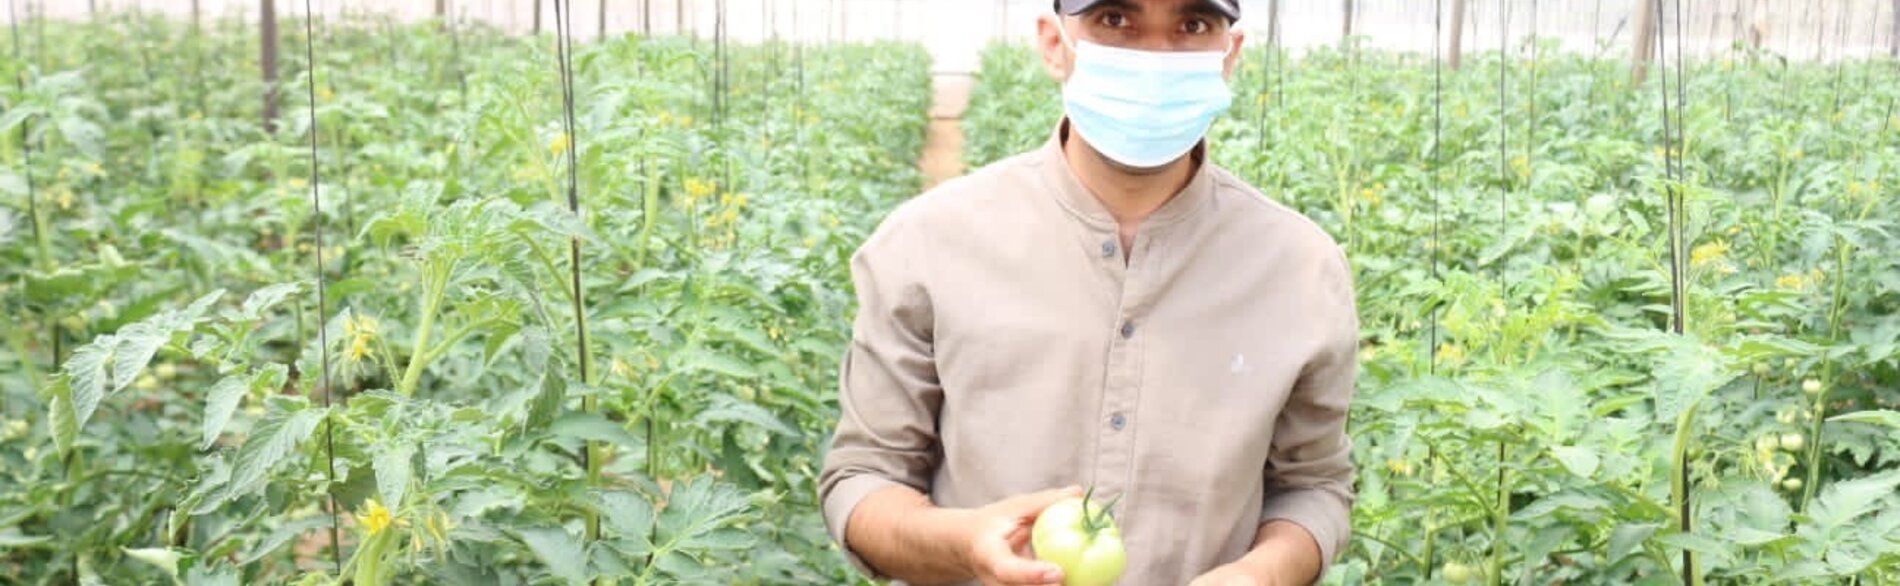 Mohammed in his tomatoes field. Photo by OCHA, July 2021.